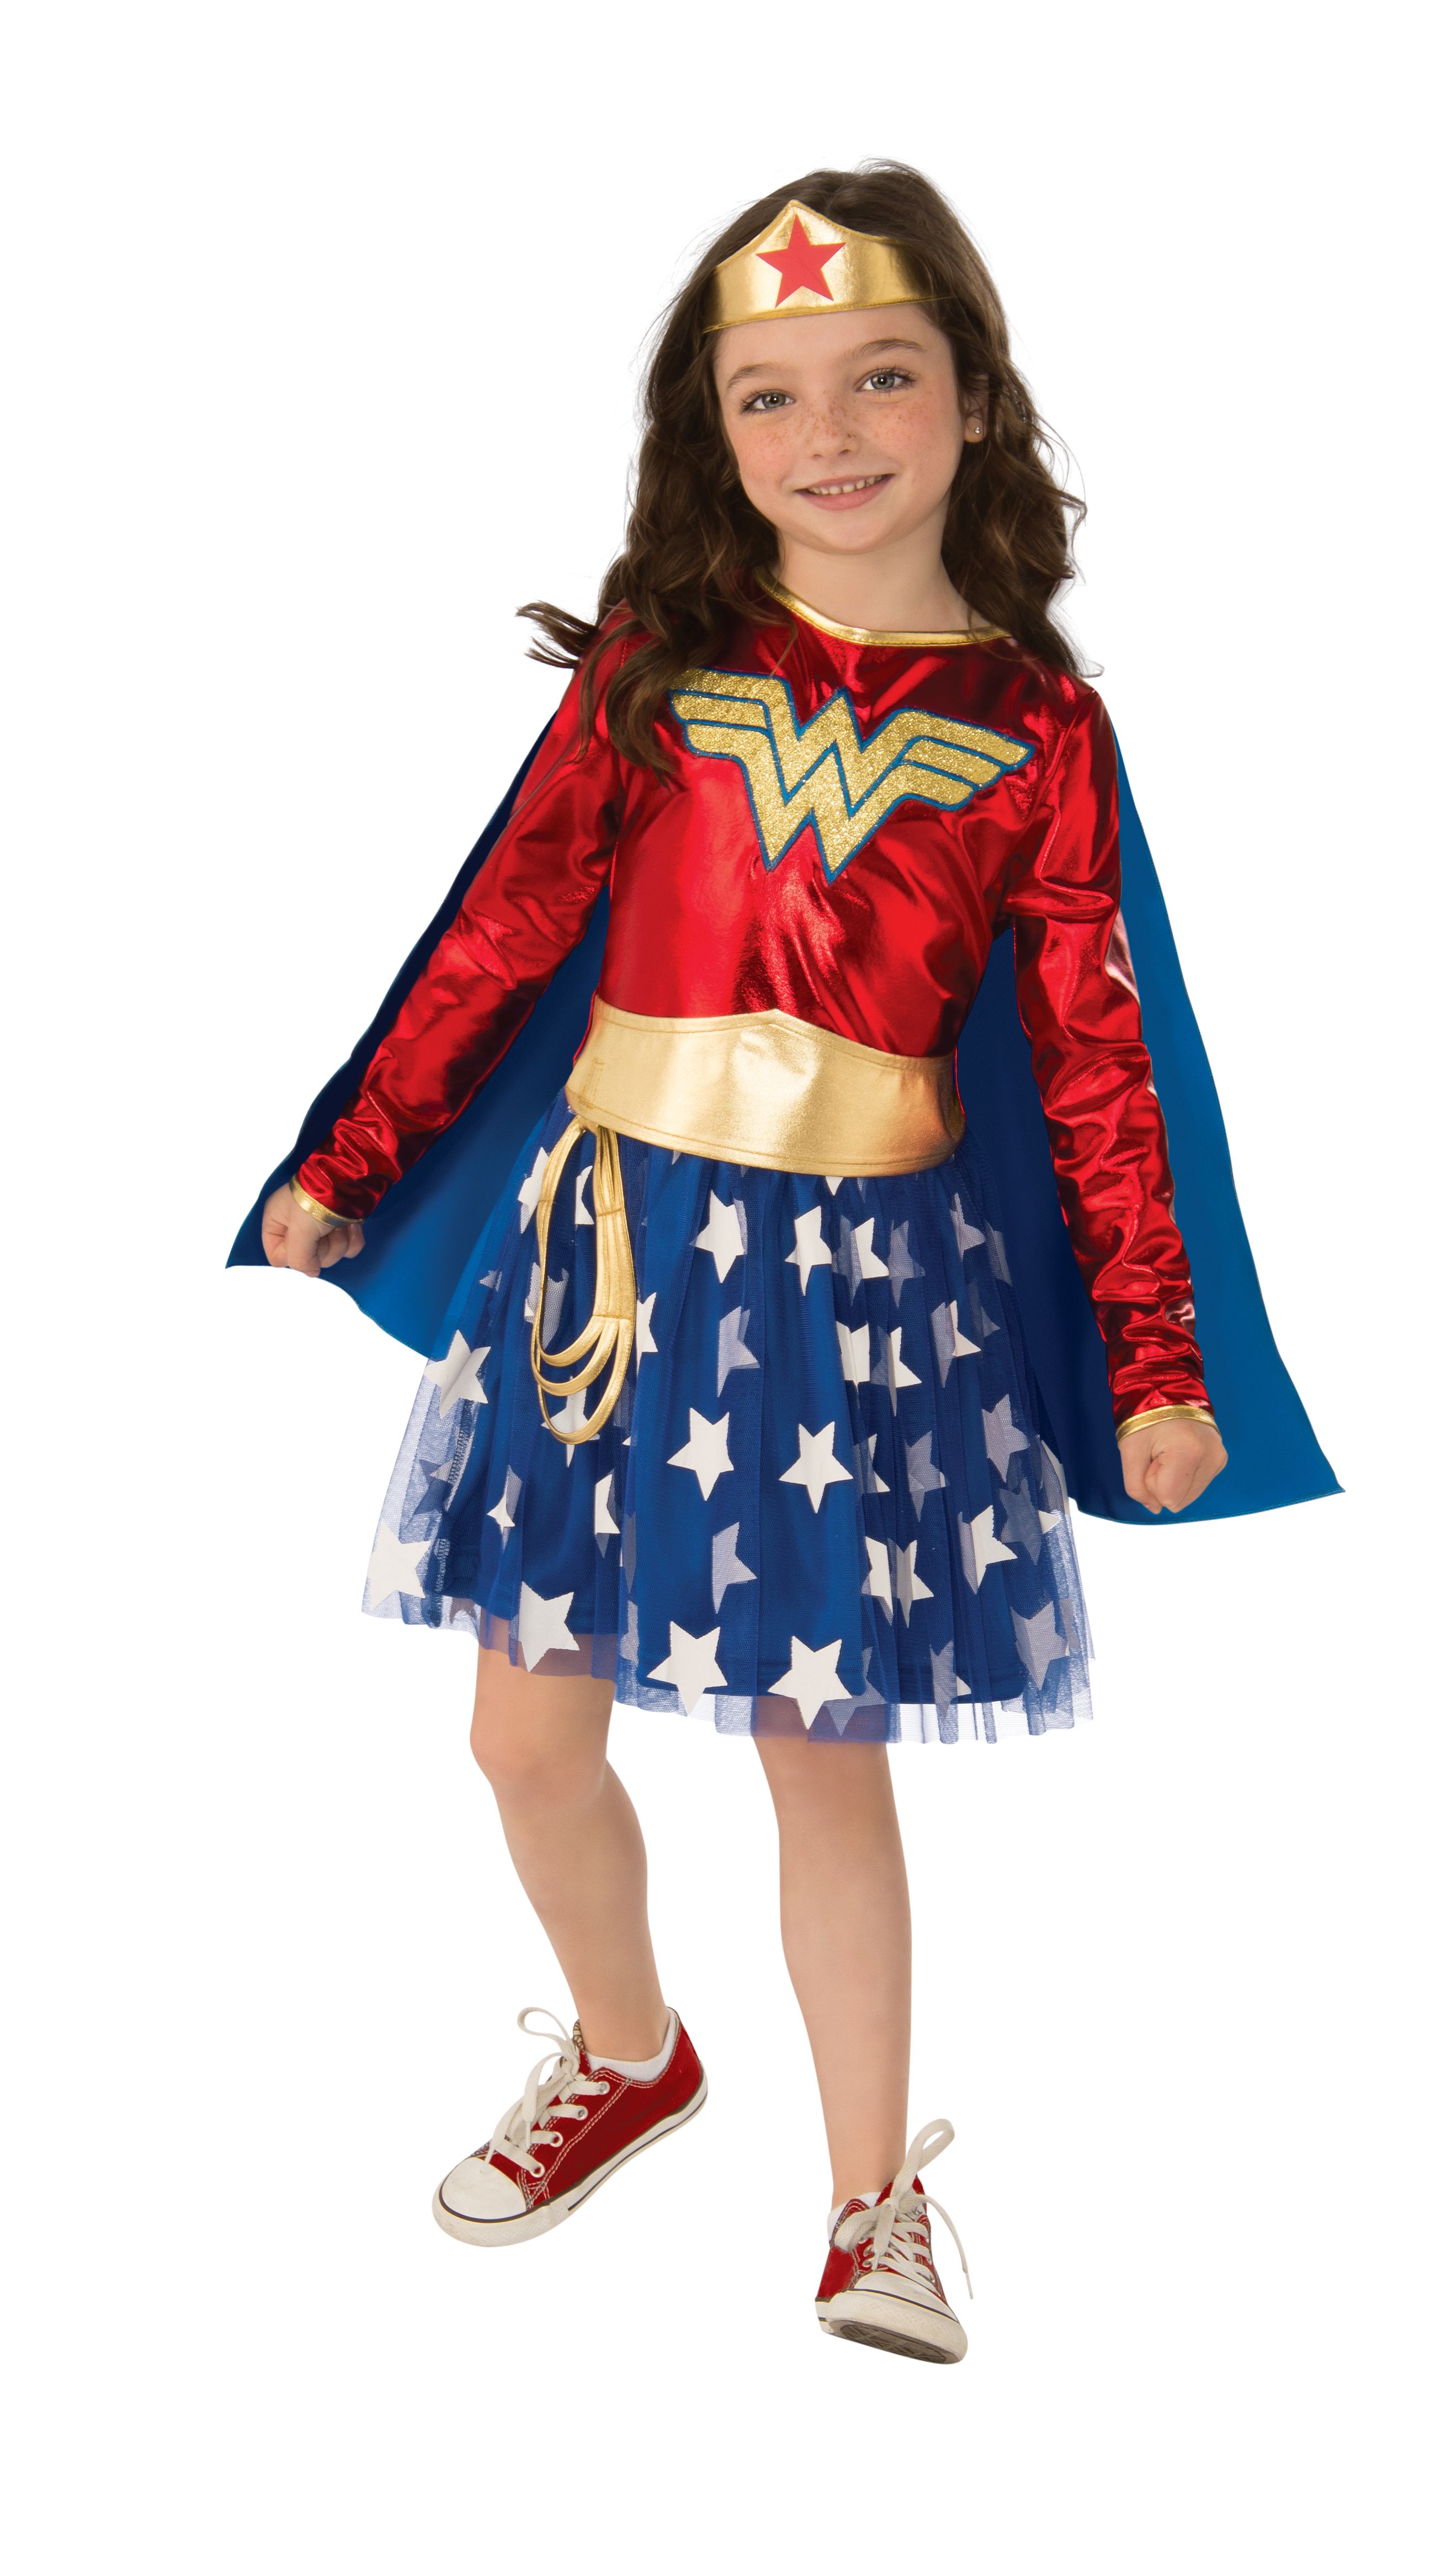 Rubies Deluxe Wonder Woman Girls Halloween Costume - image 1 of 4